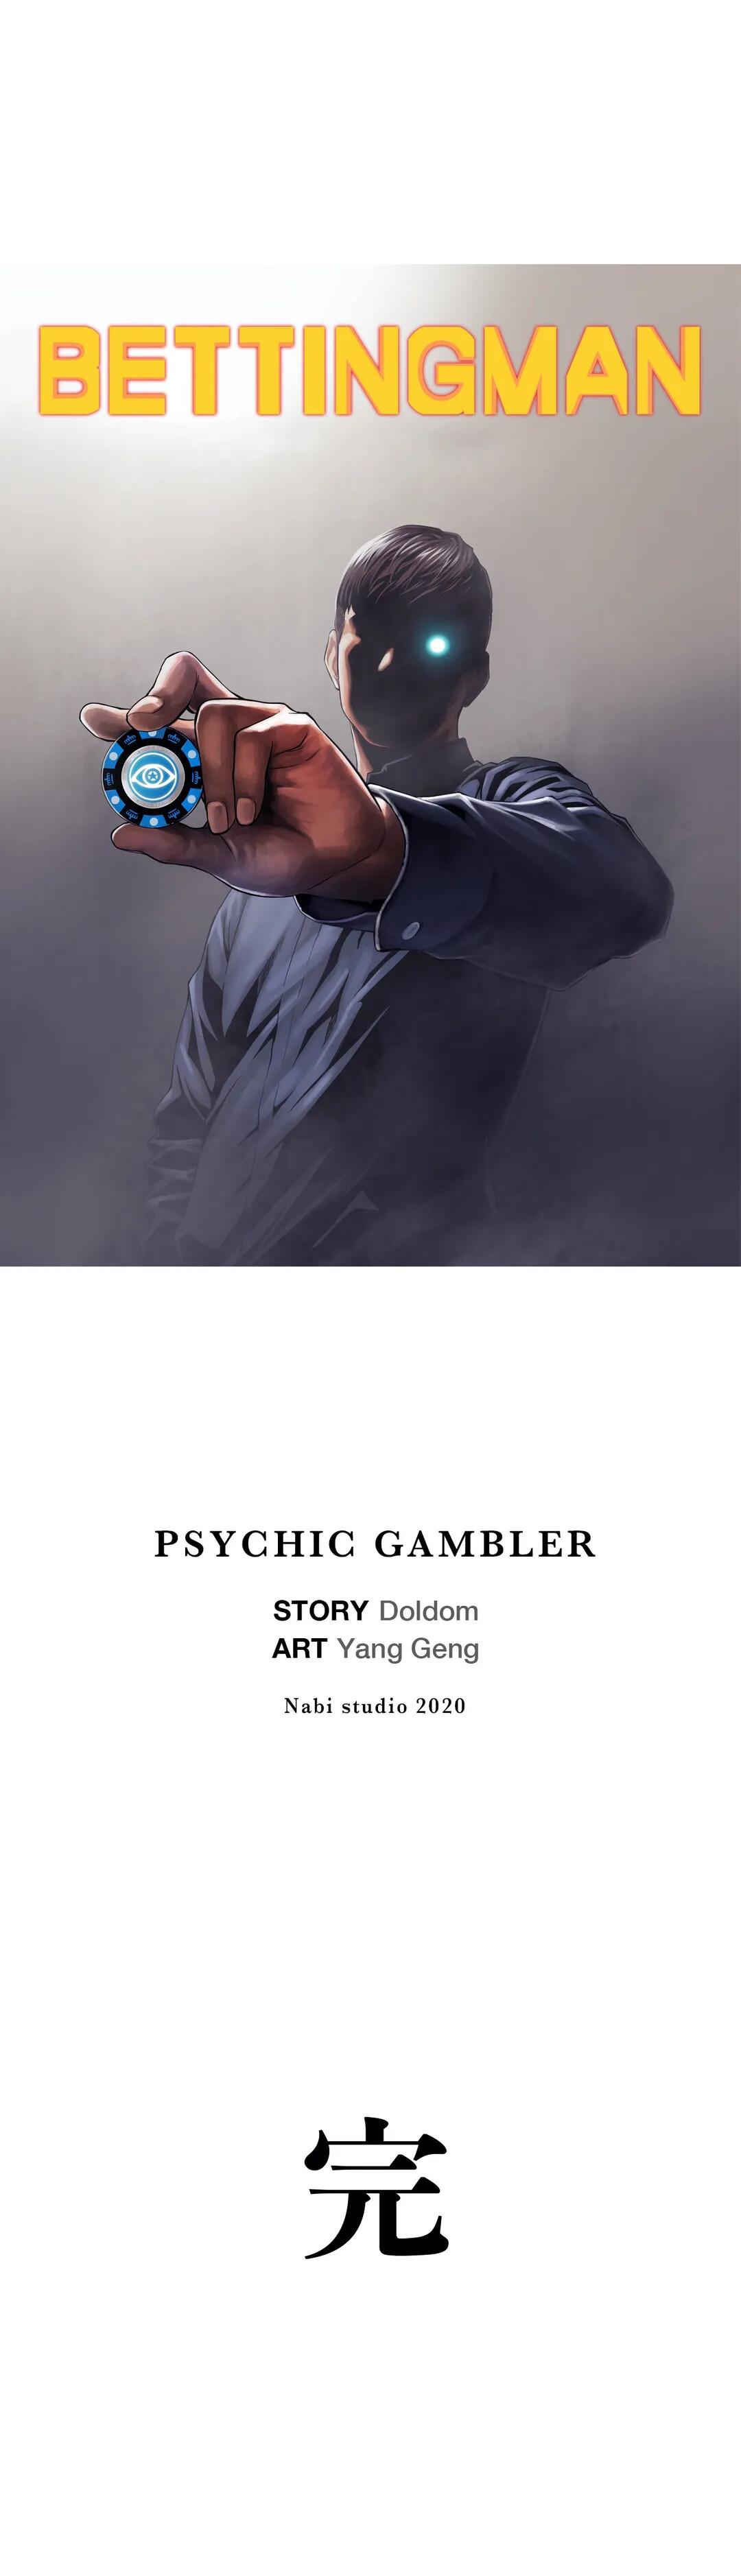 Psychic Gambler: Betting Man - Page 2